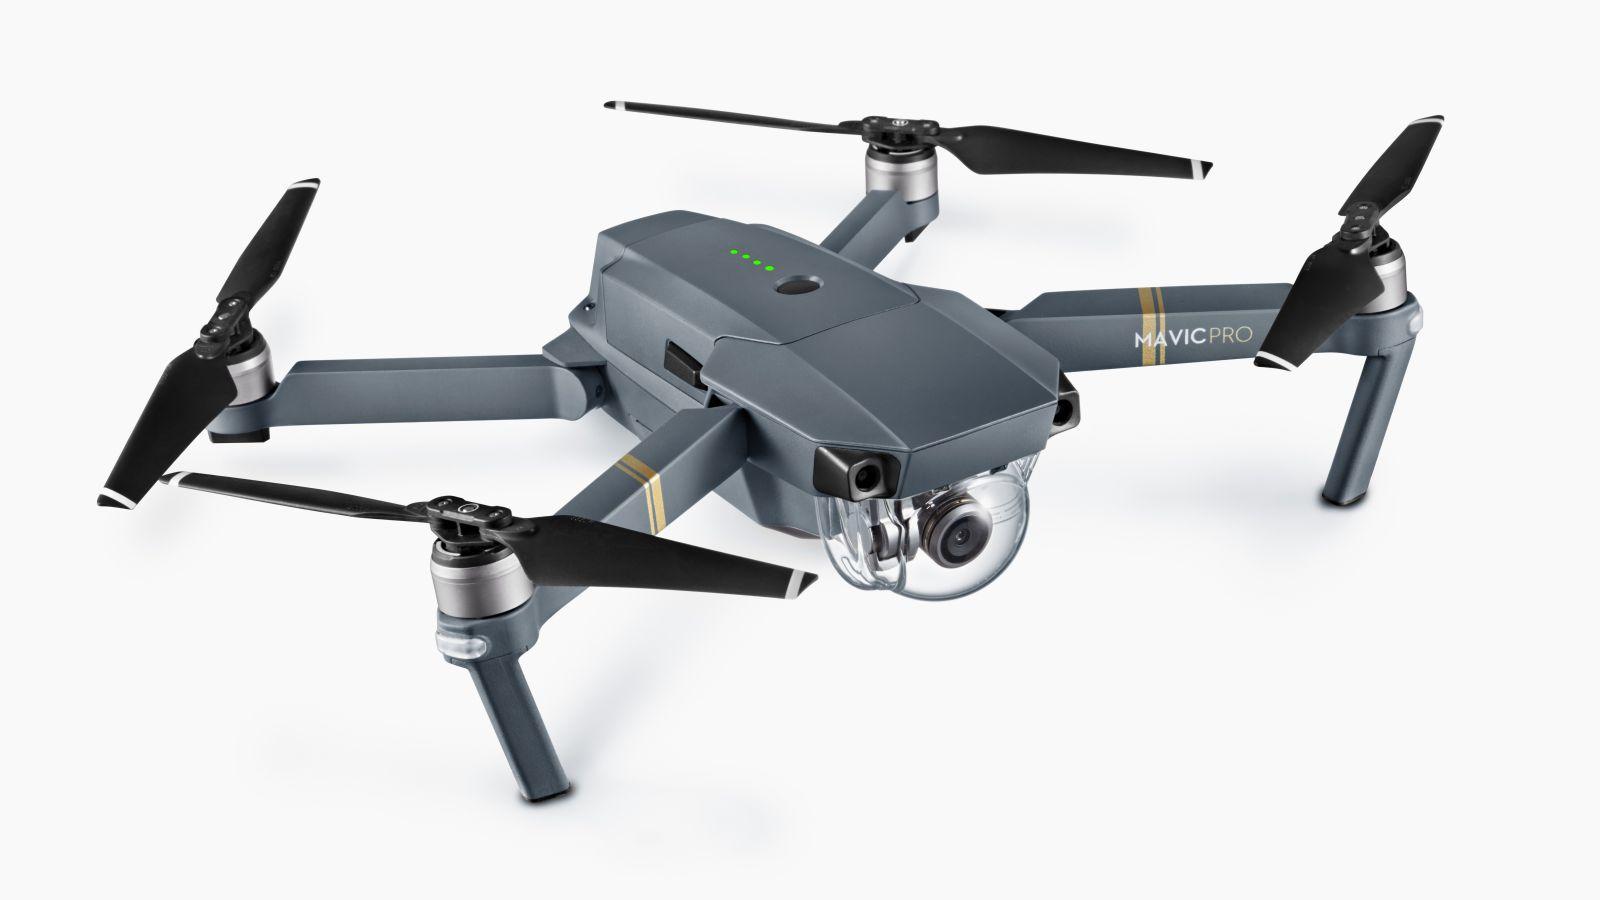 Lowest Price] DJI Mavic Pro Drone Full Combo at $1025.99 [Coupon]